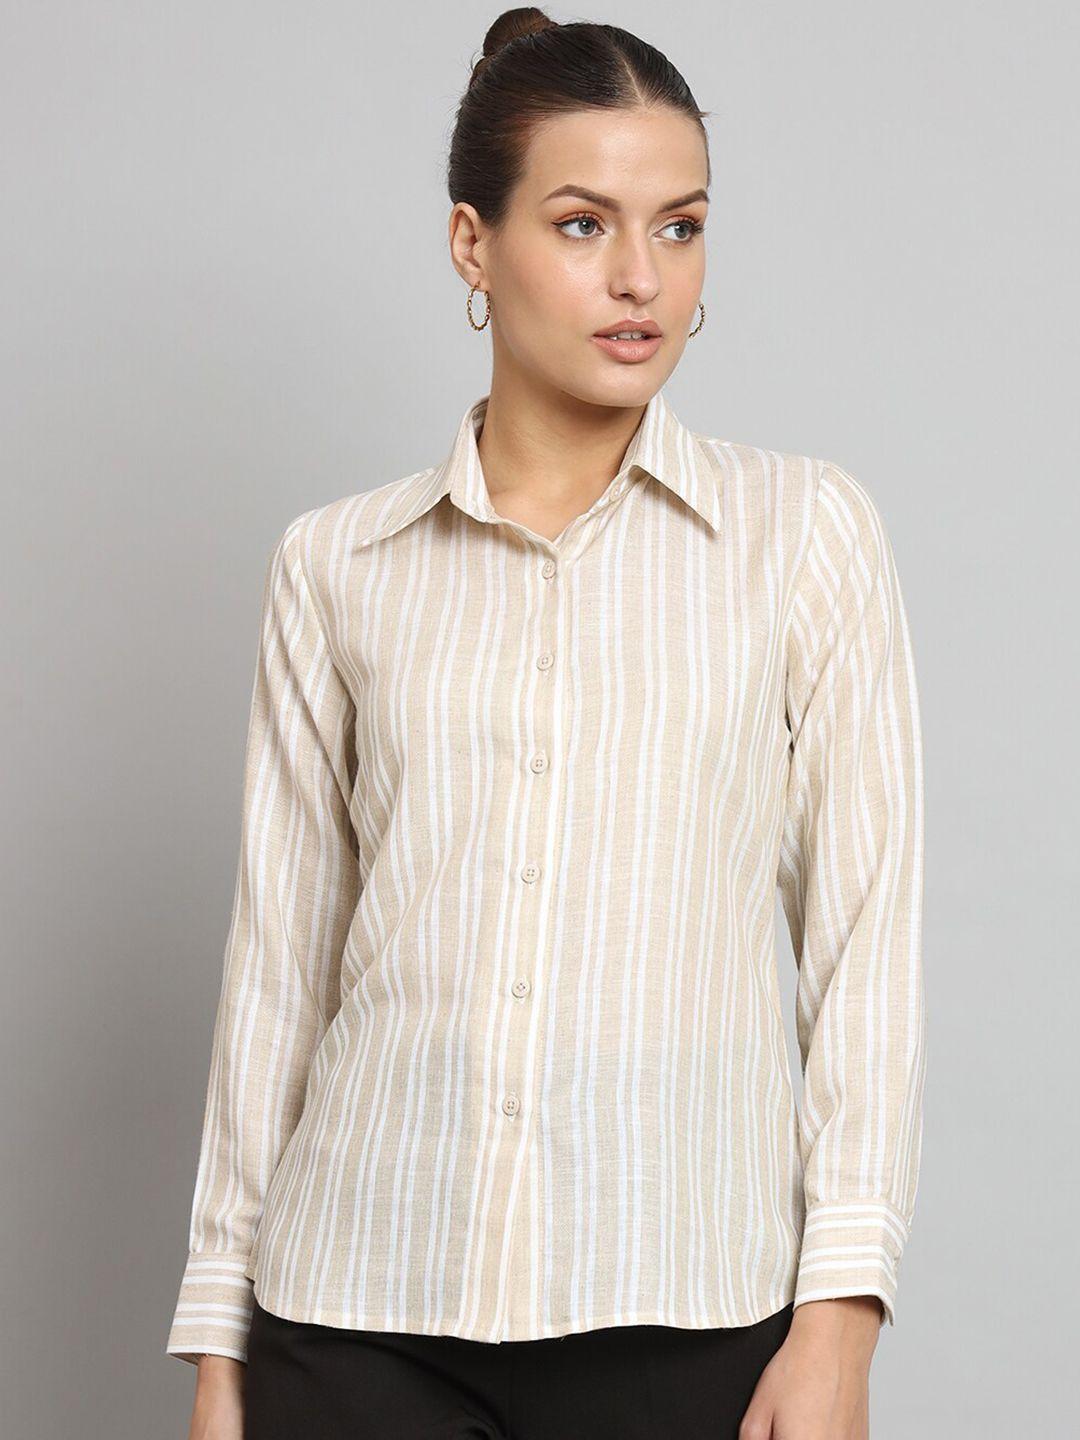 powersutra classic striped casual shirt